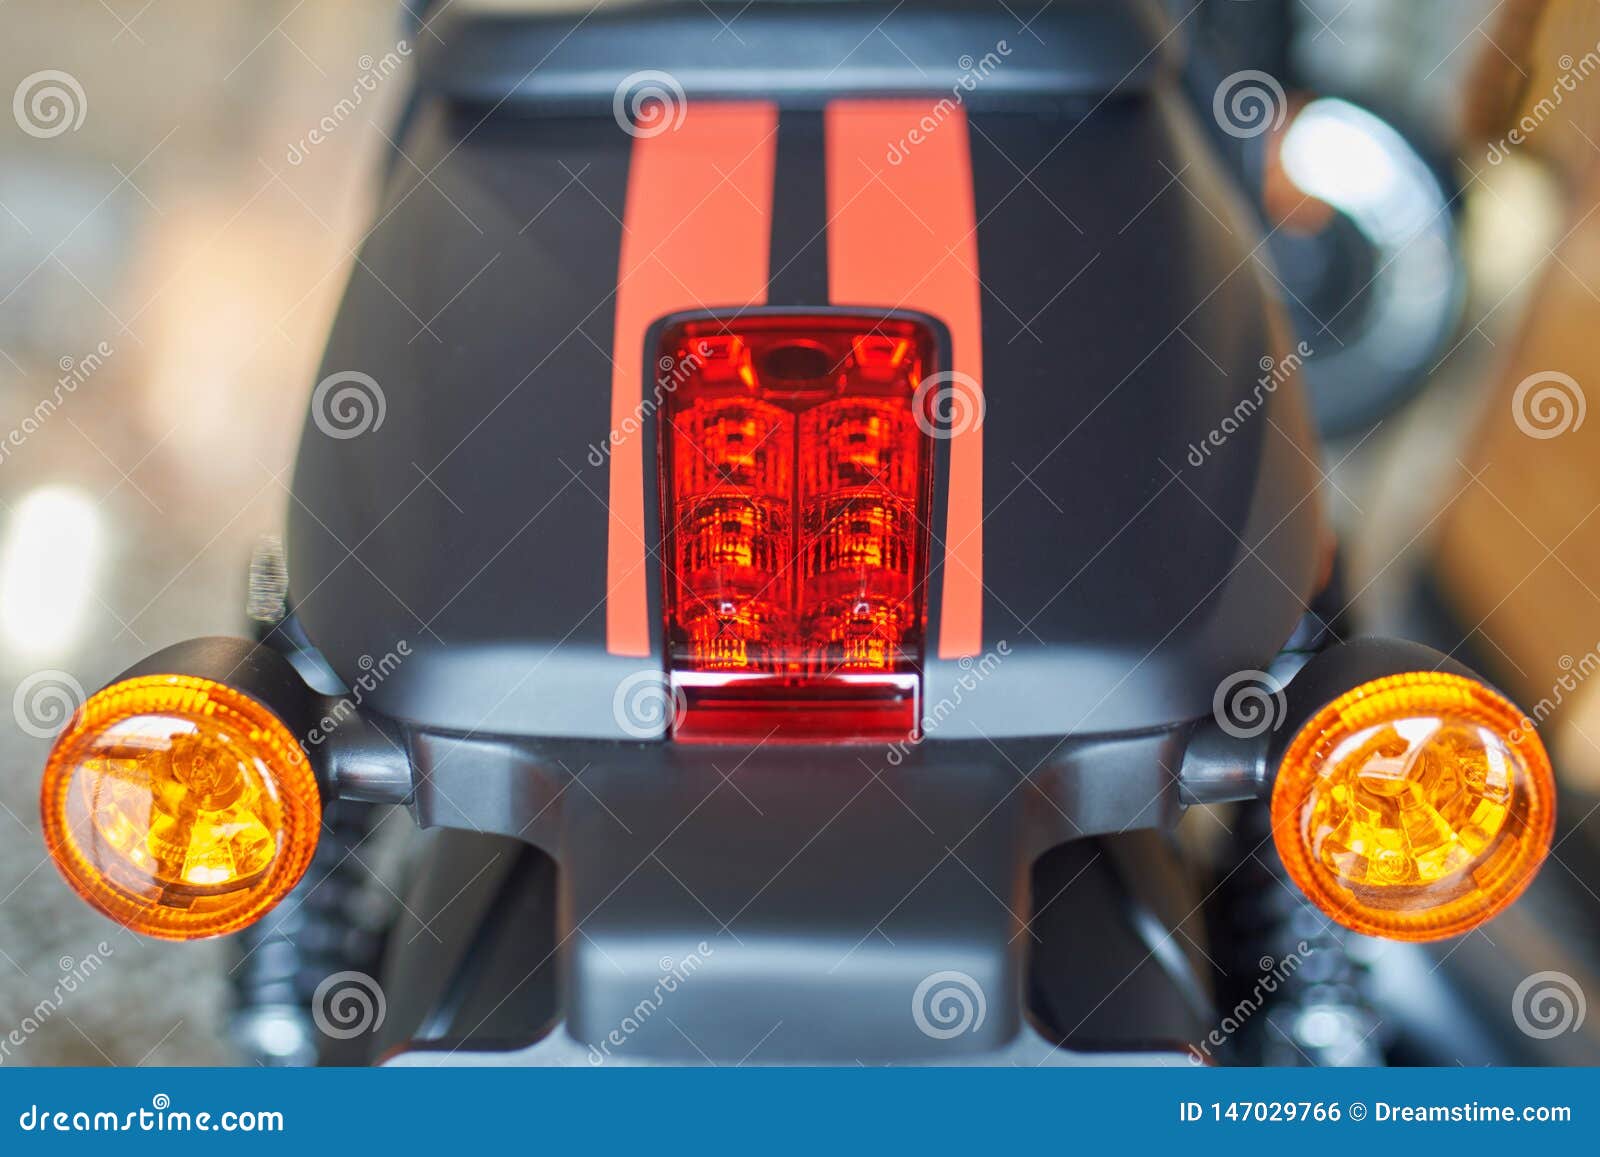 Motorcycle brake light stock photo. Image of plastic - 147029766